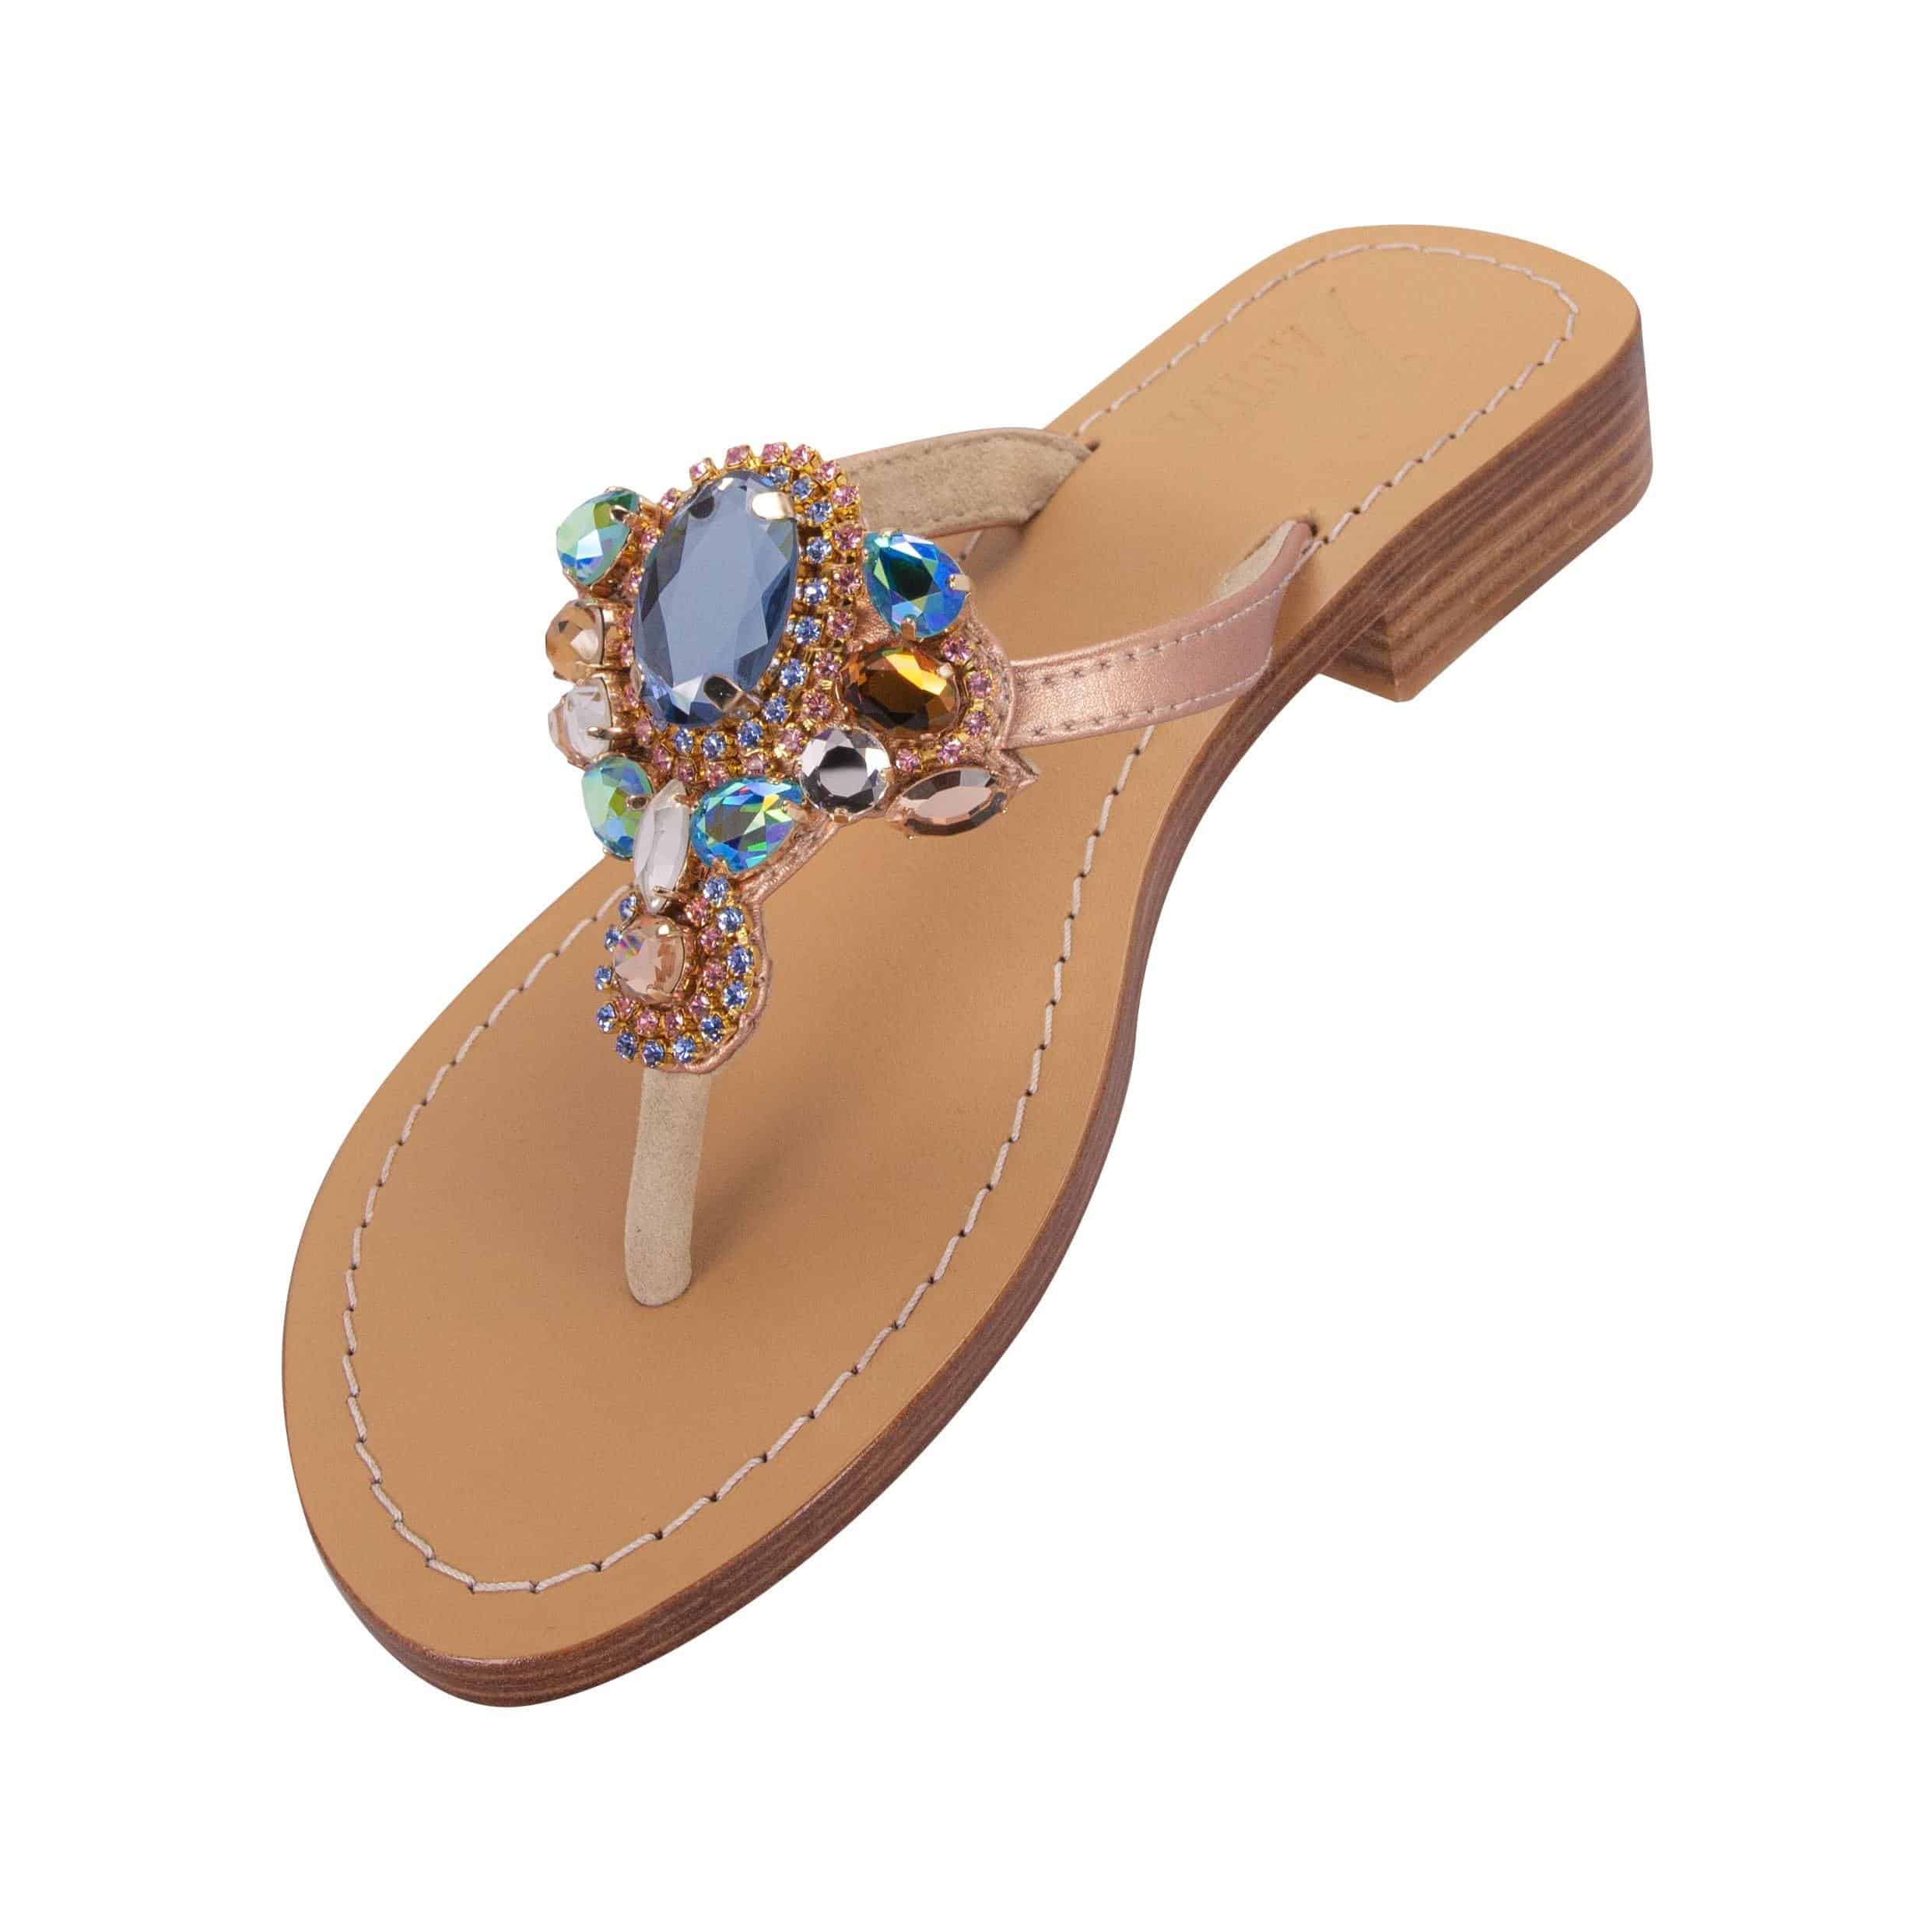 DJERBA - Pasha - Jewelry for your feet